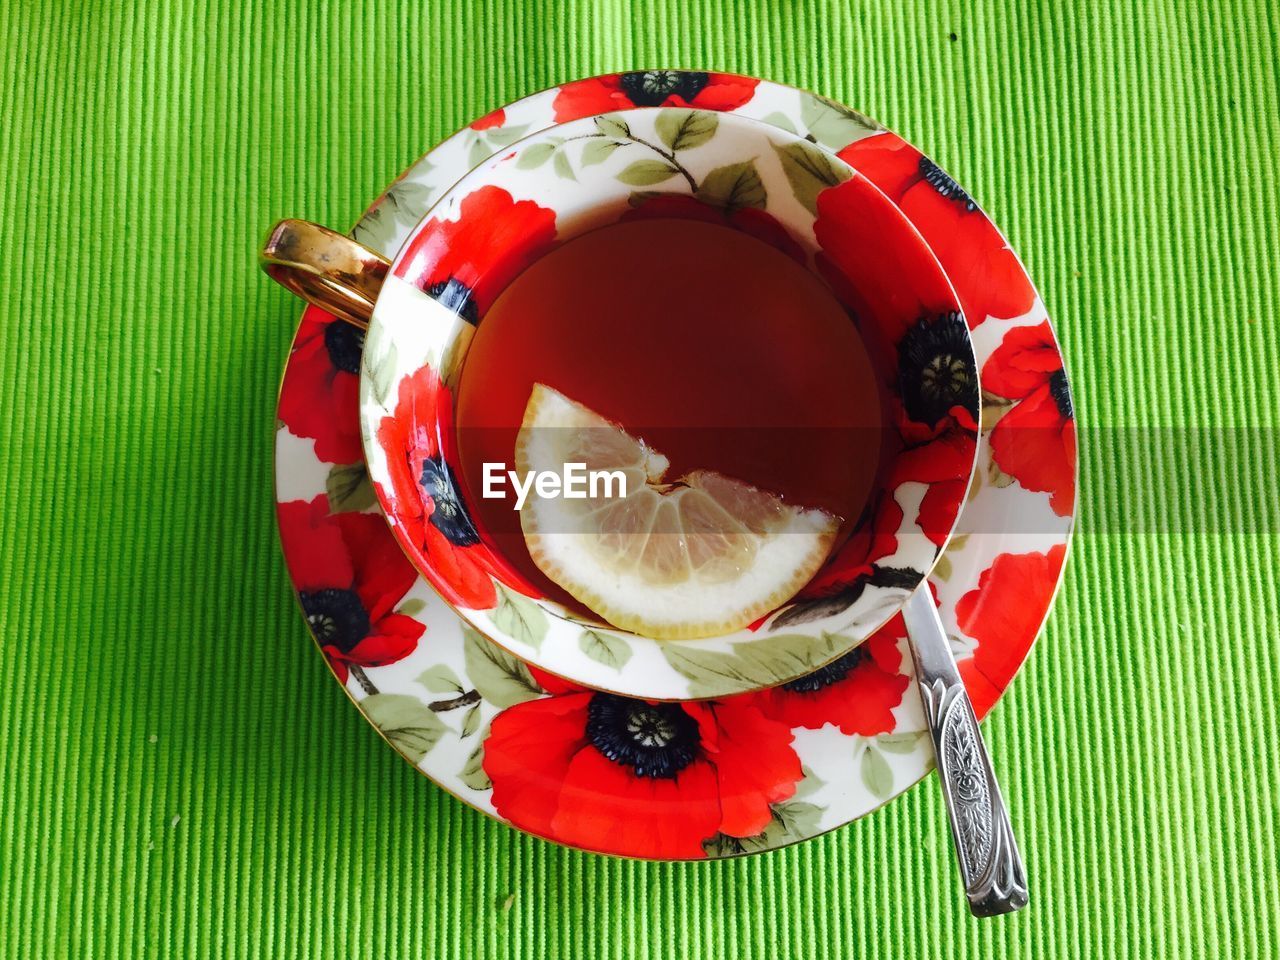 Cup and saucer of lemon tea with teaspoon